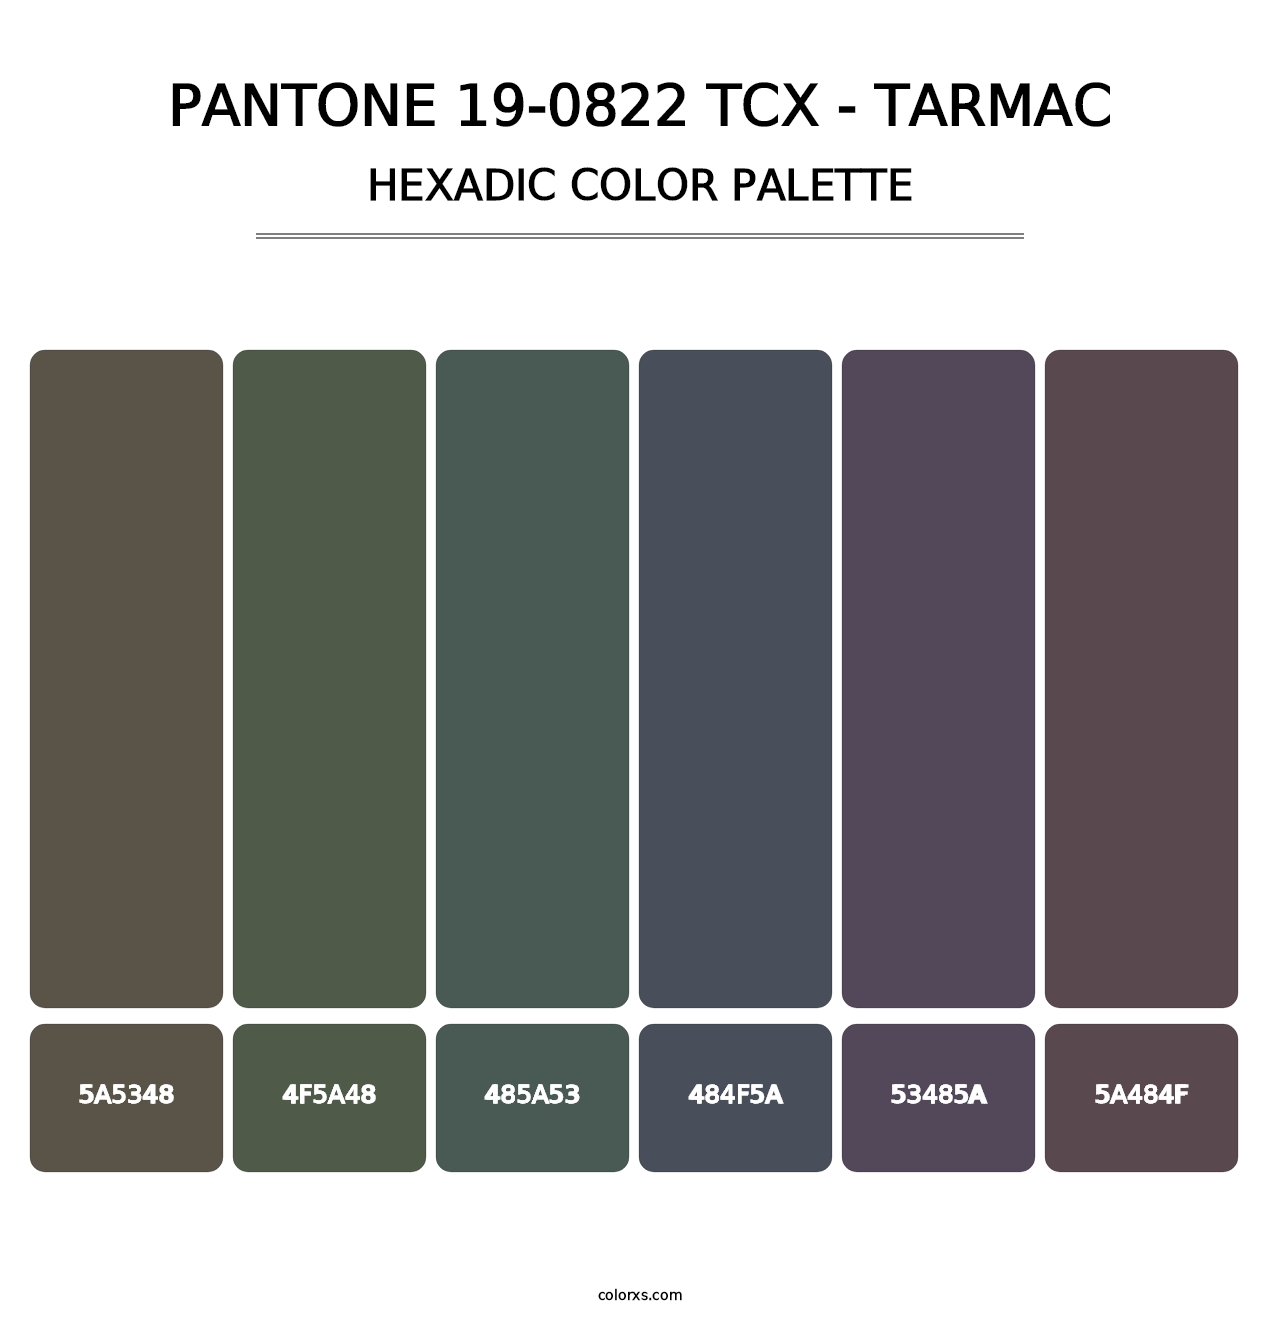 PANTONE 19-0822 TCX - Tarmac - Hexadic Color Palette